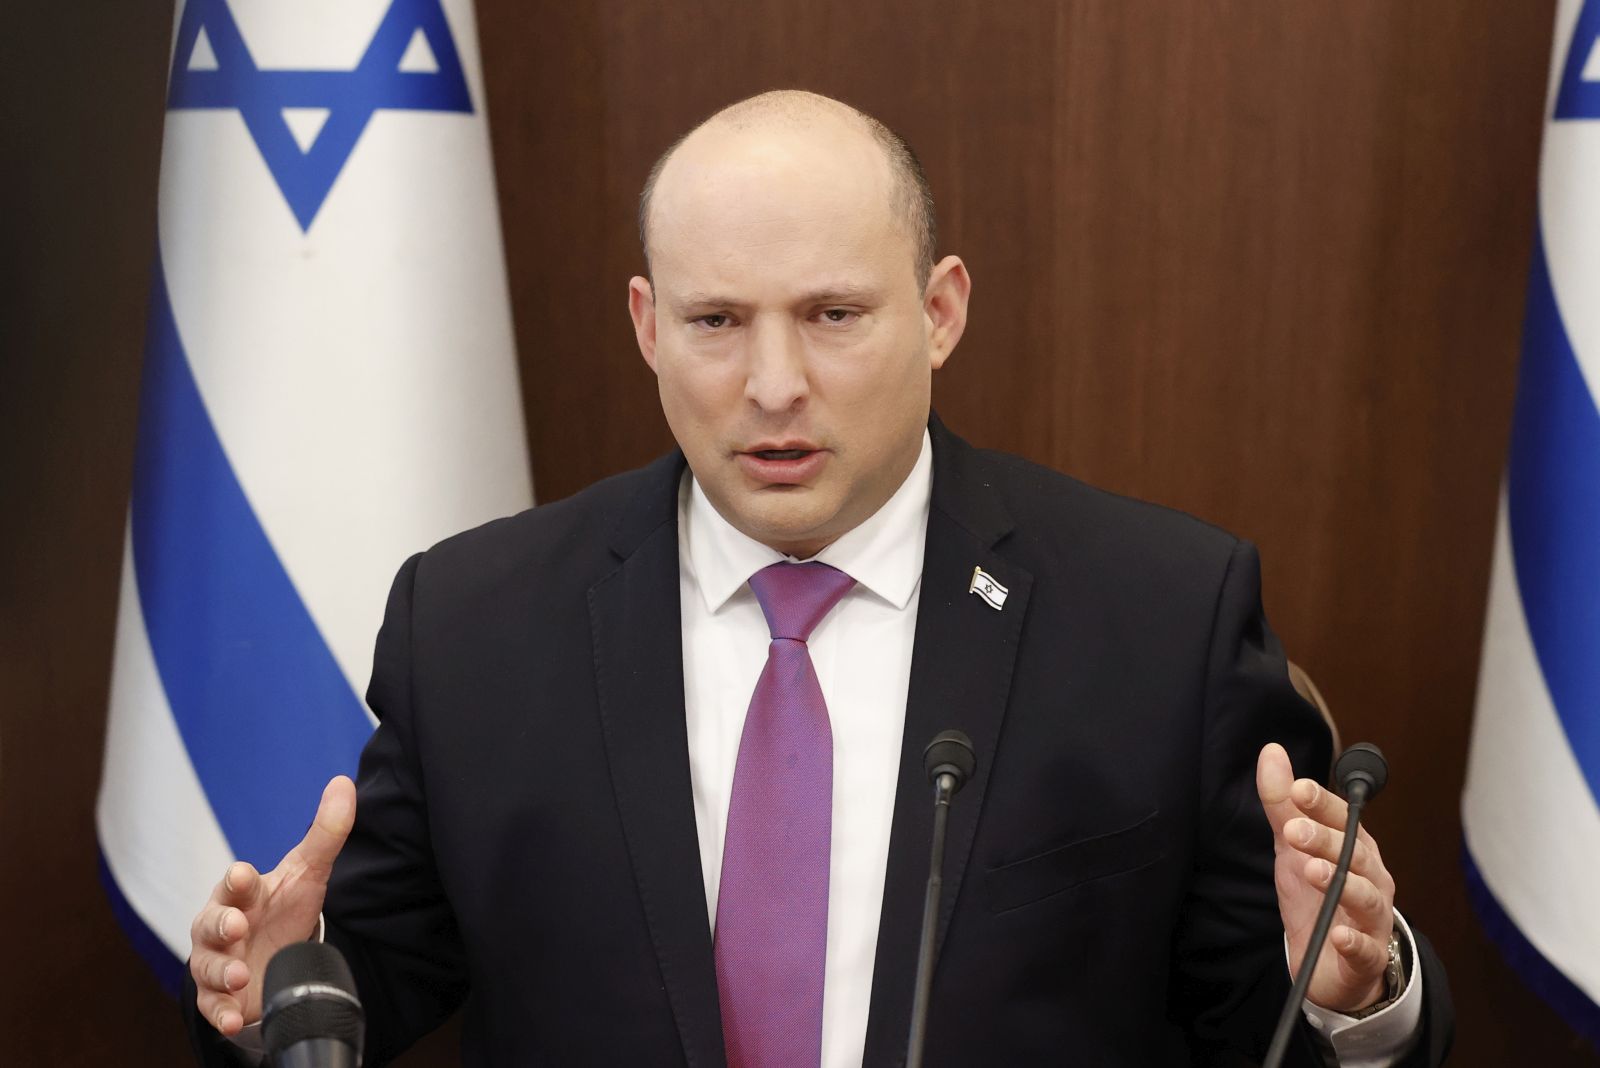 epa09824169 Israeli Prime Minister Naftali Bennett attends a cabinet meeting at Prime Minister's office in Jerusalem, 14 March 2022.  EPA/JACK GUEZ / POOL